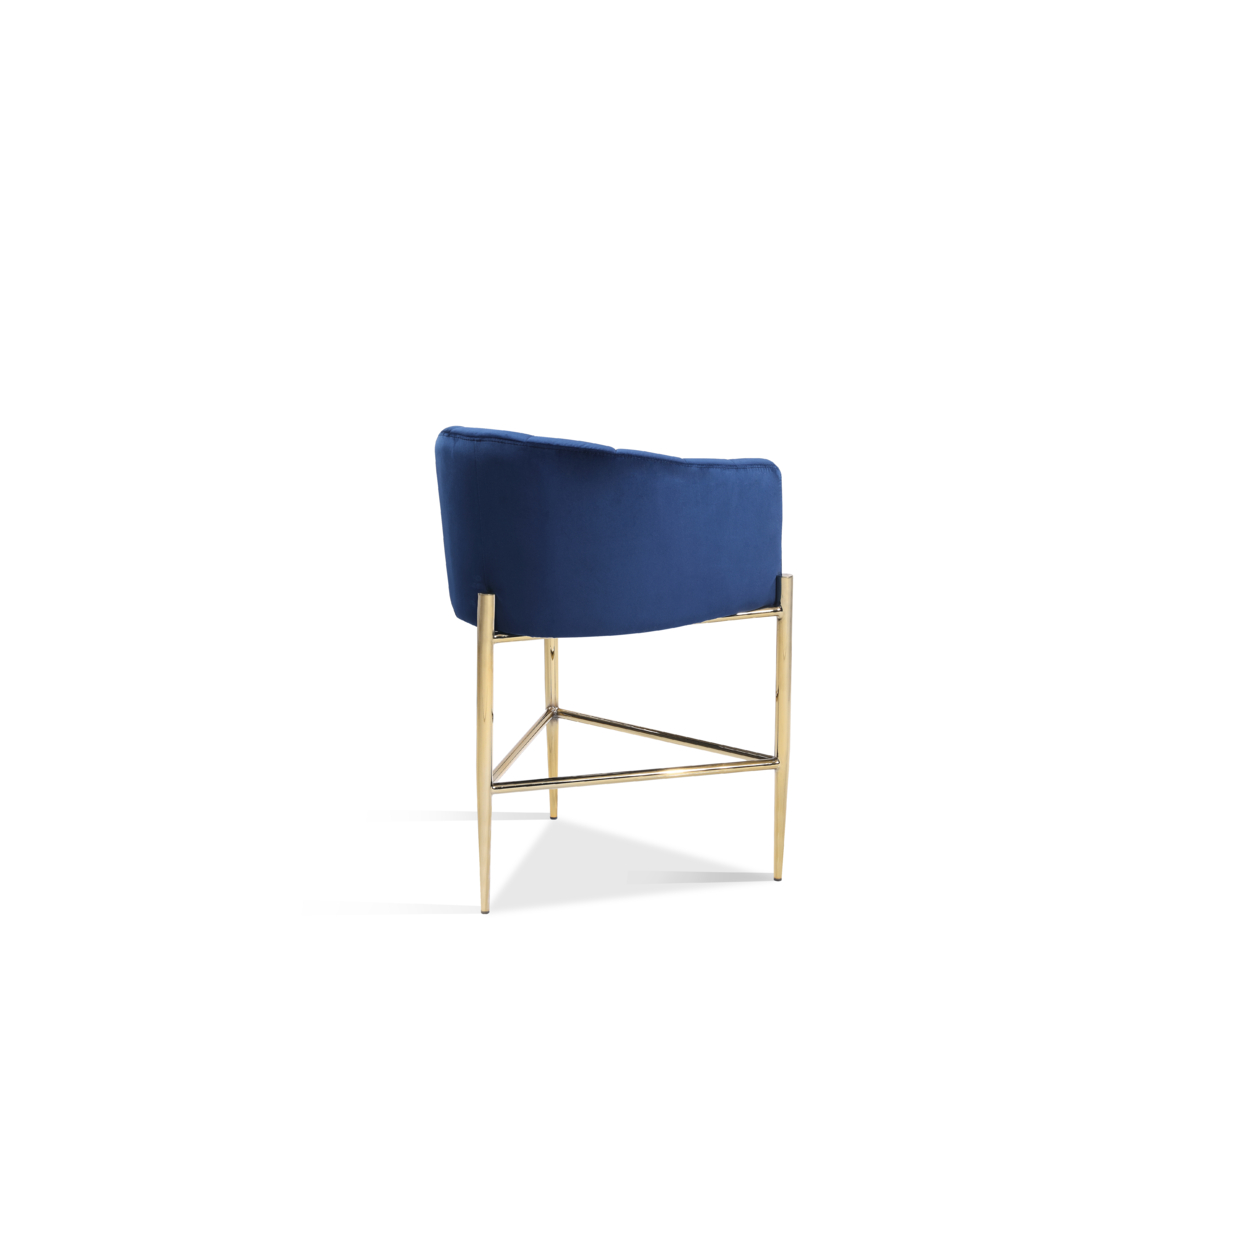 Iconic Home Ardee Counter Stool Chair Velvet Upholstered Shelter Arm Shell Design 3 Legged Gold Tone Solid Metal Base - Navy